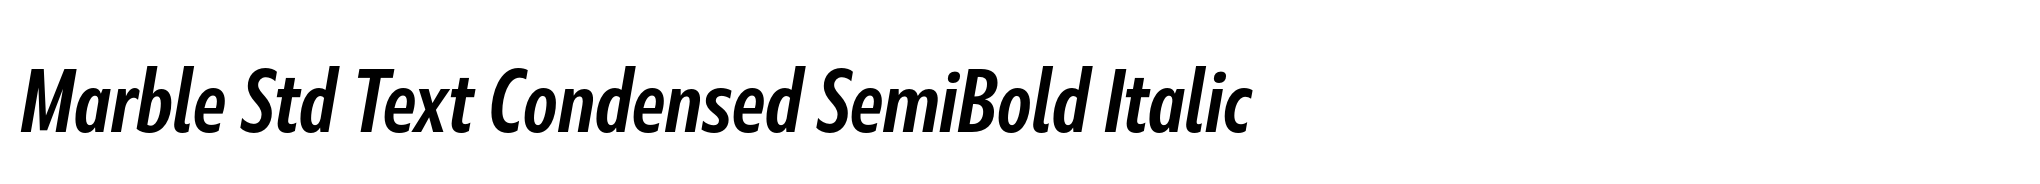 Marble Std Text Condensed SemiBold Italic image